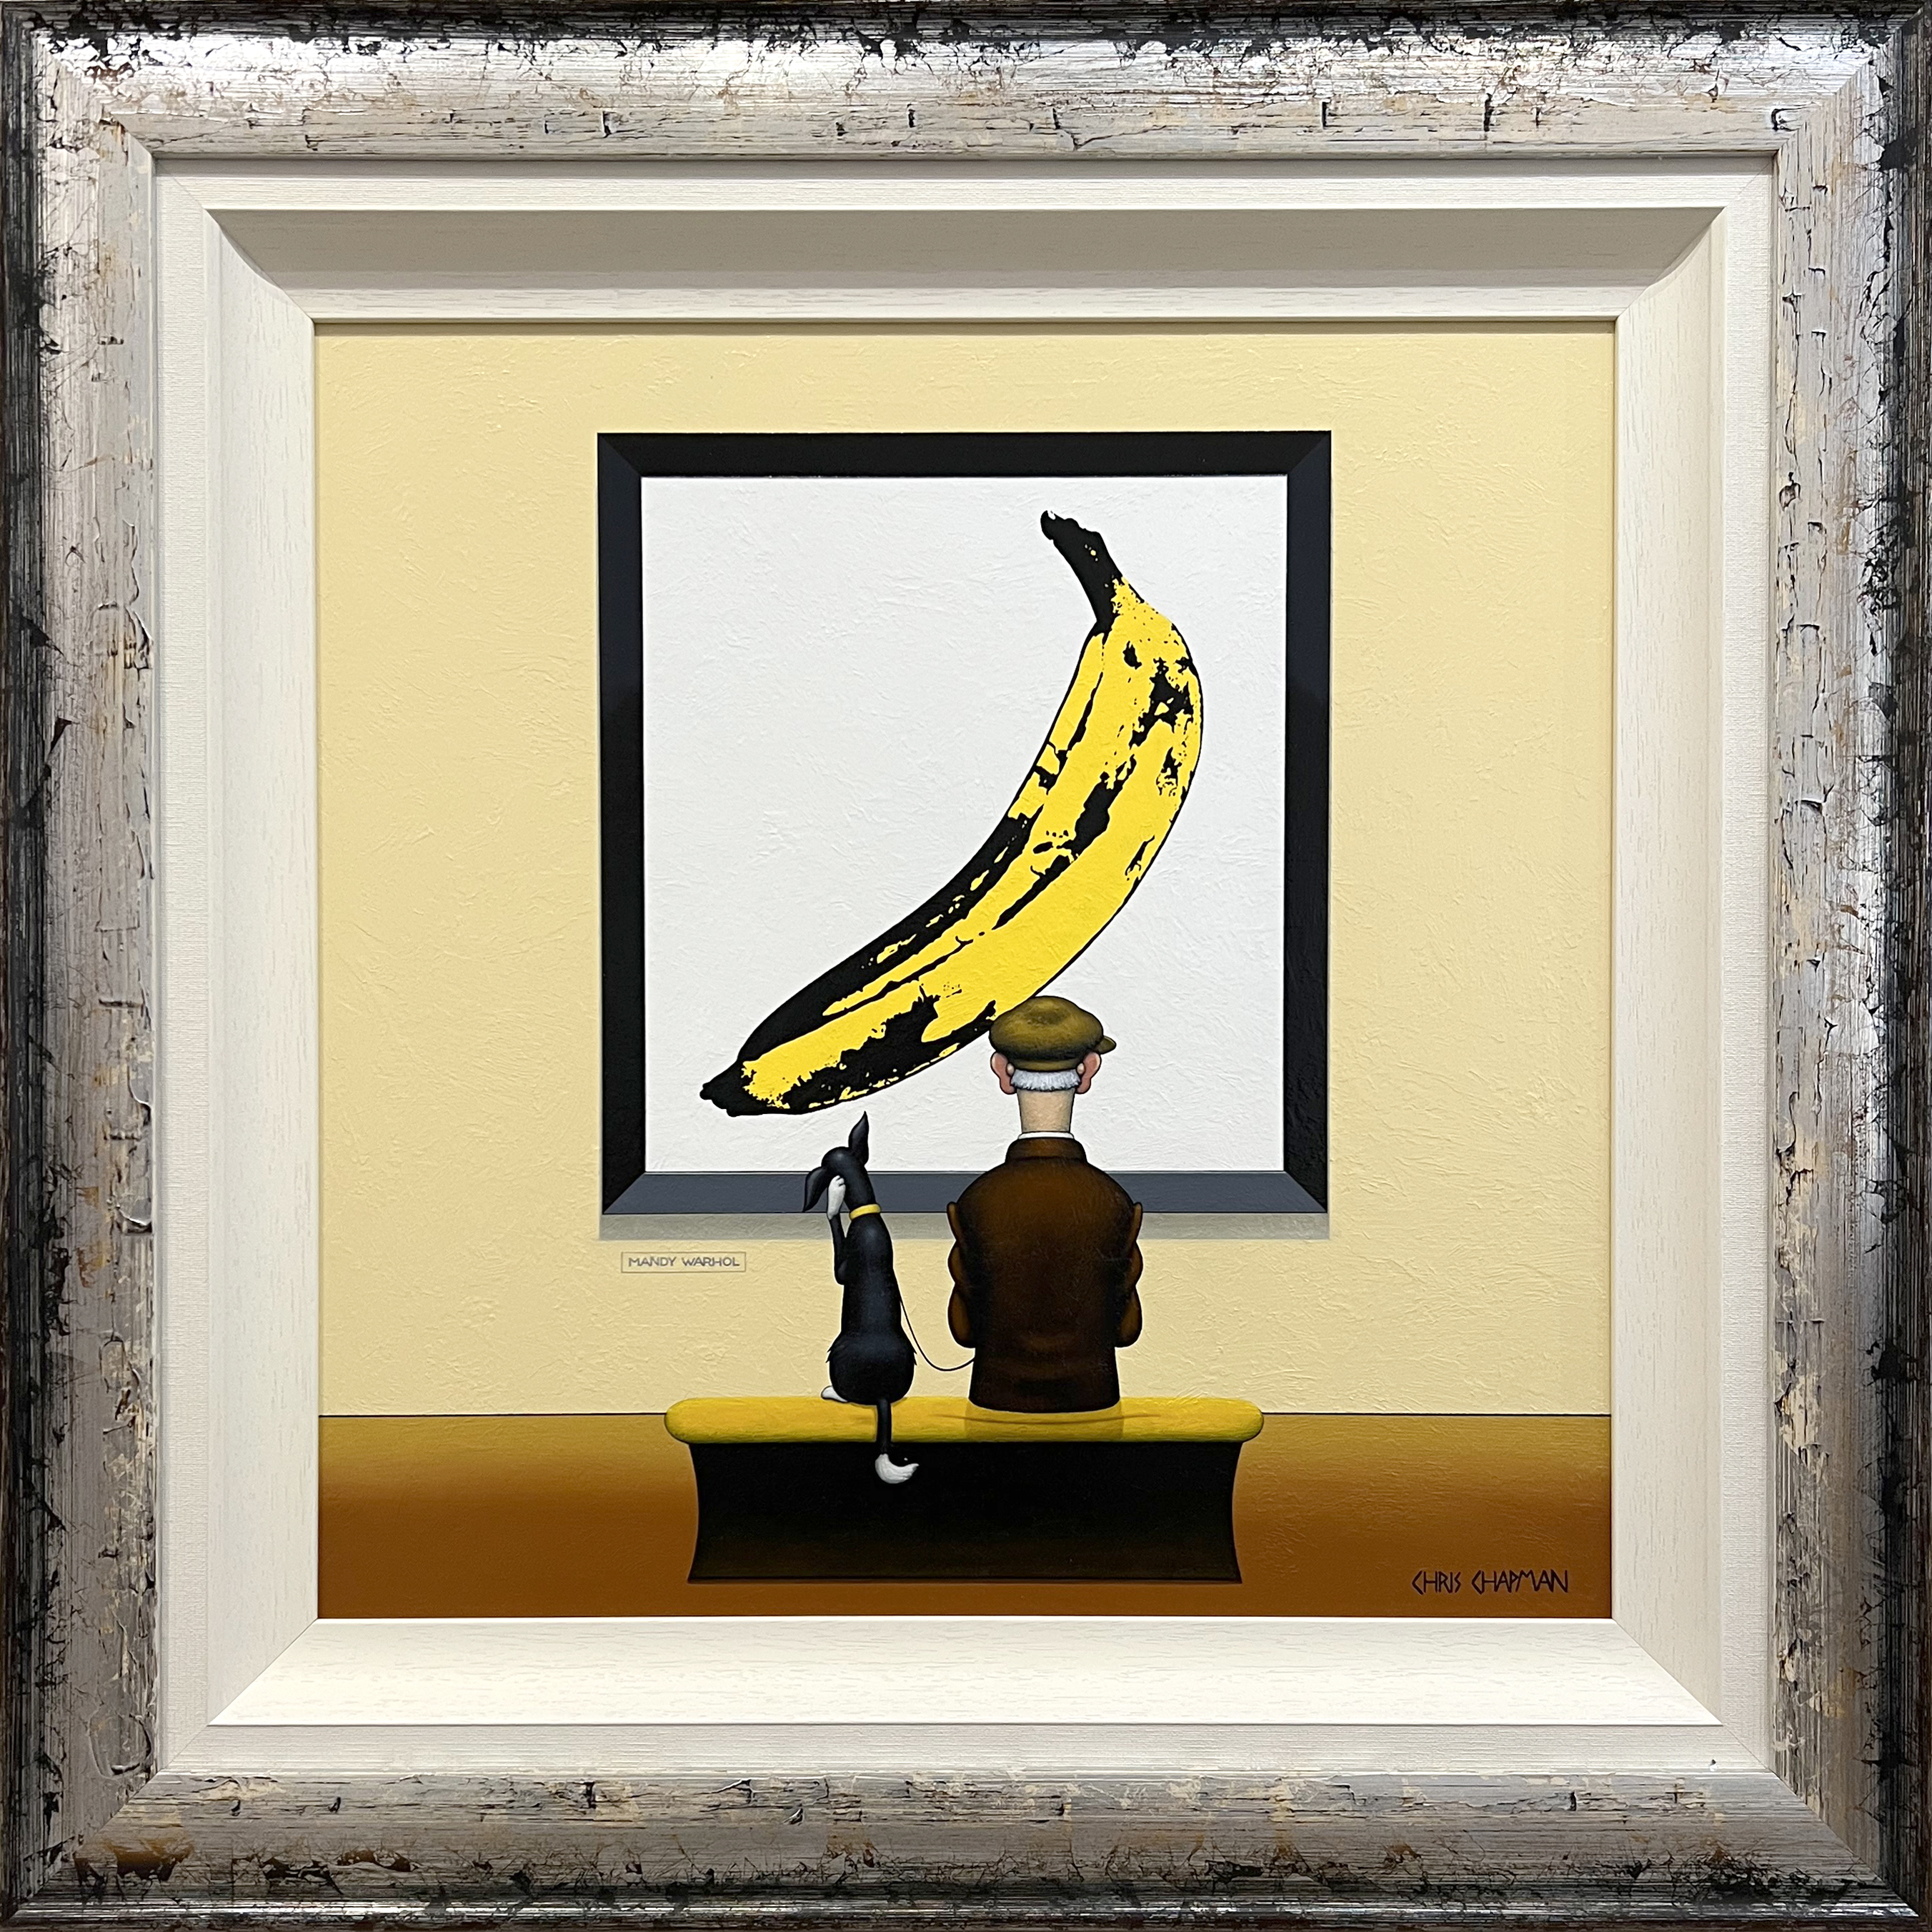 Chris Chapman, Original Painting, ‘Mandy Warhol - Banana Art’